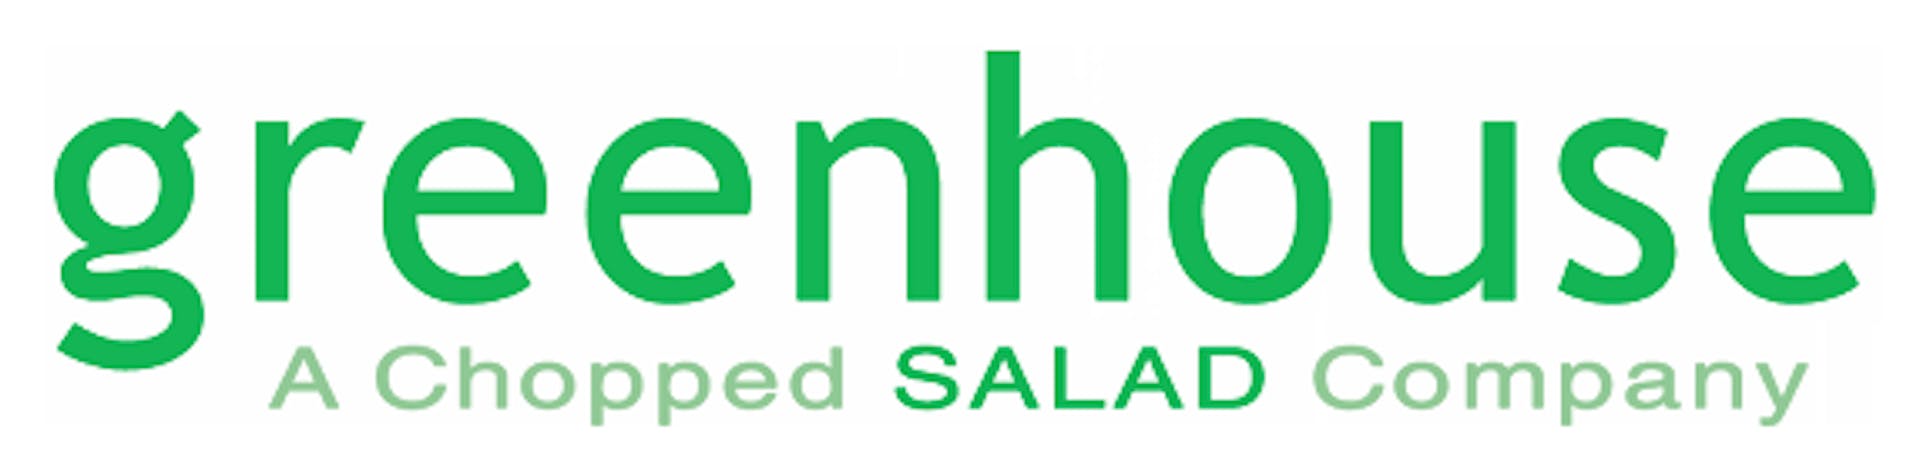 Greenhouse Salad Company